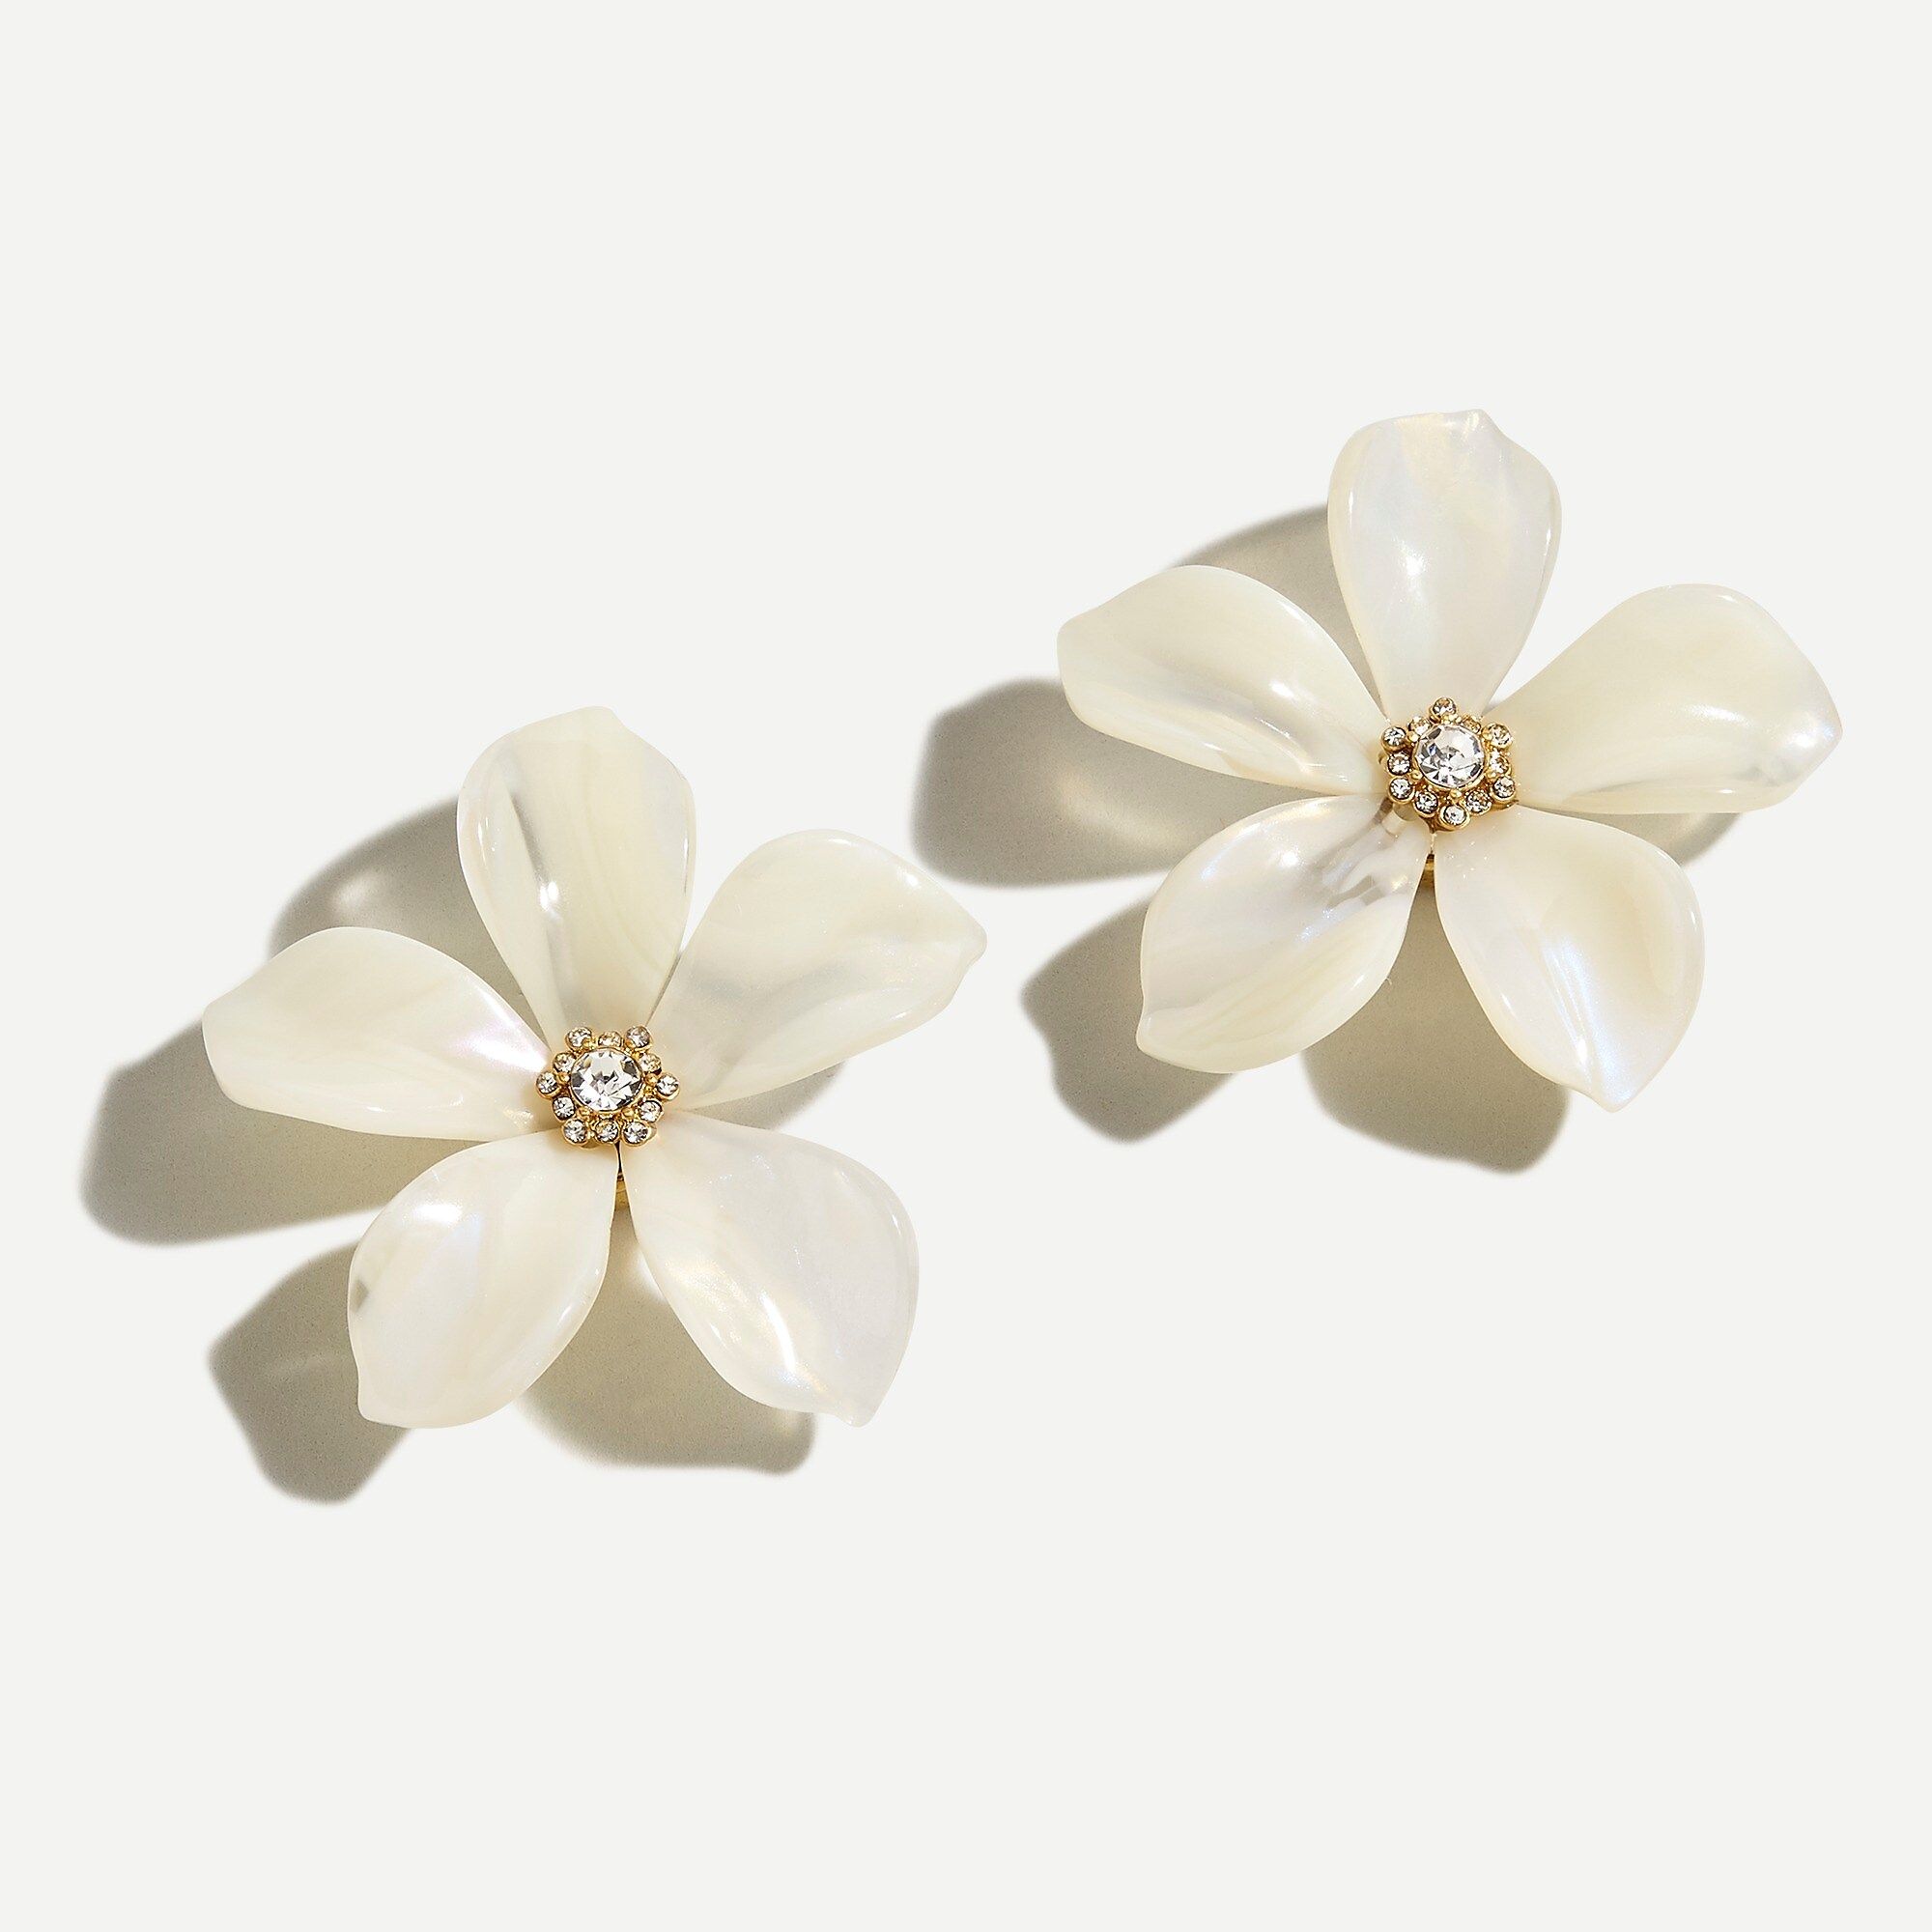 Acetate flower earrings with pavé detail | J.Crew US